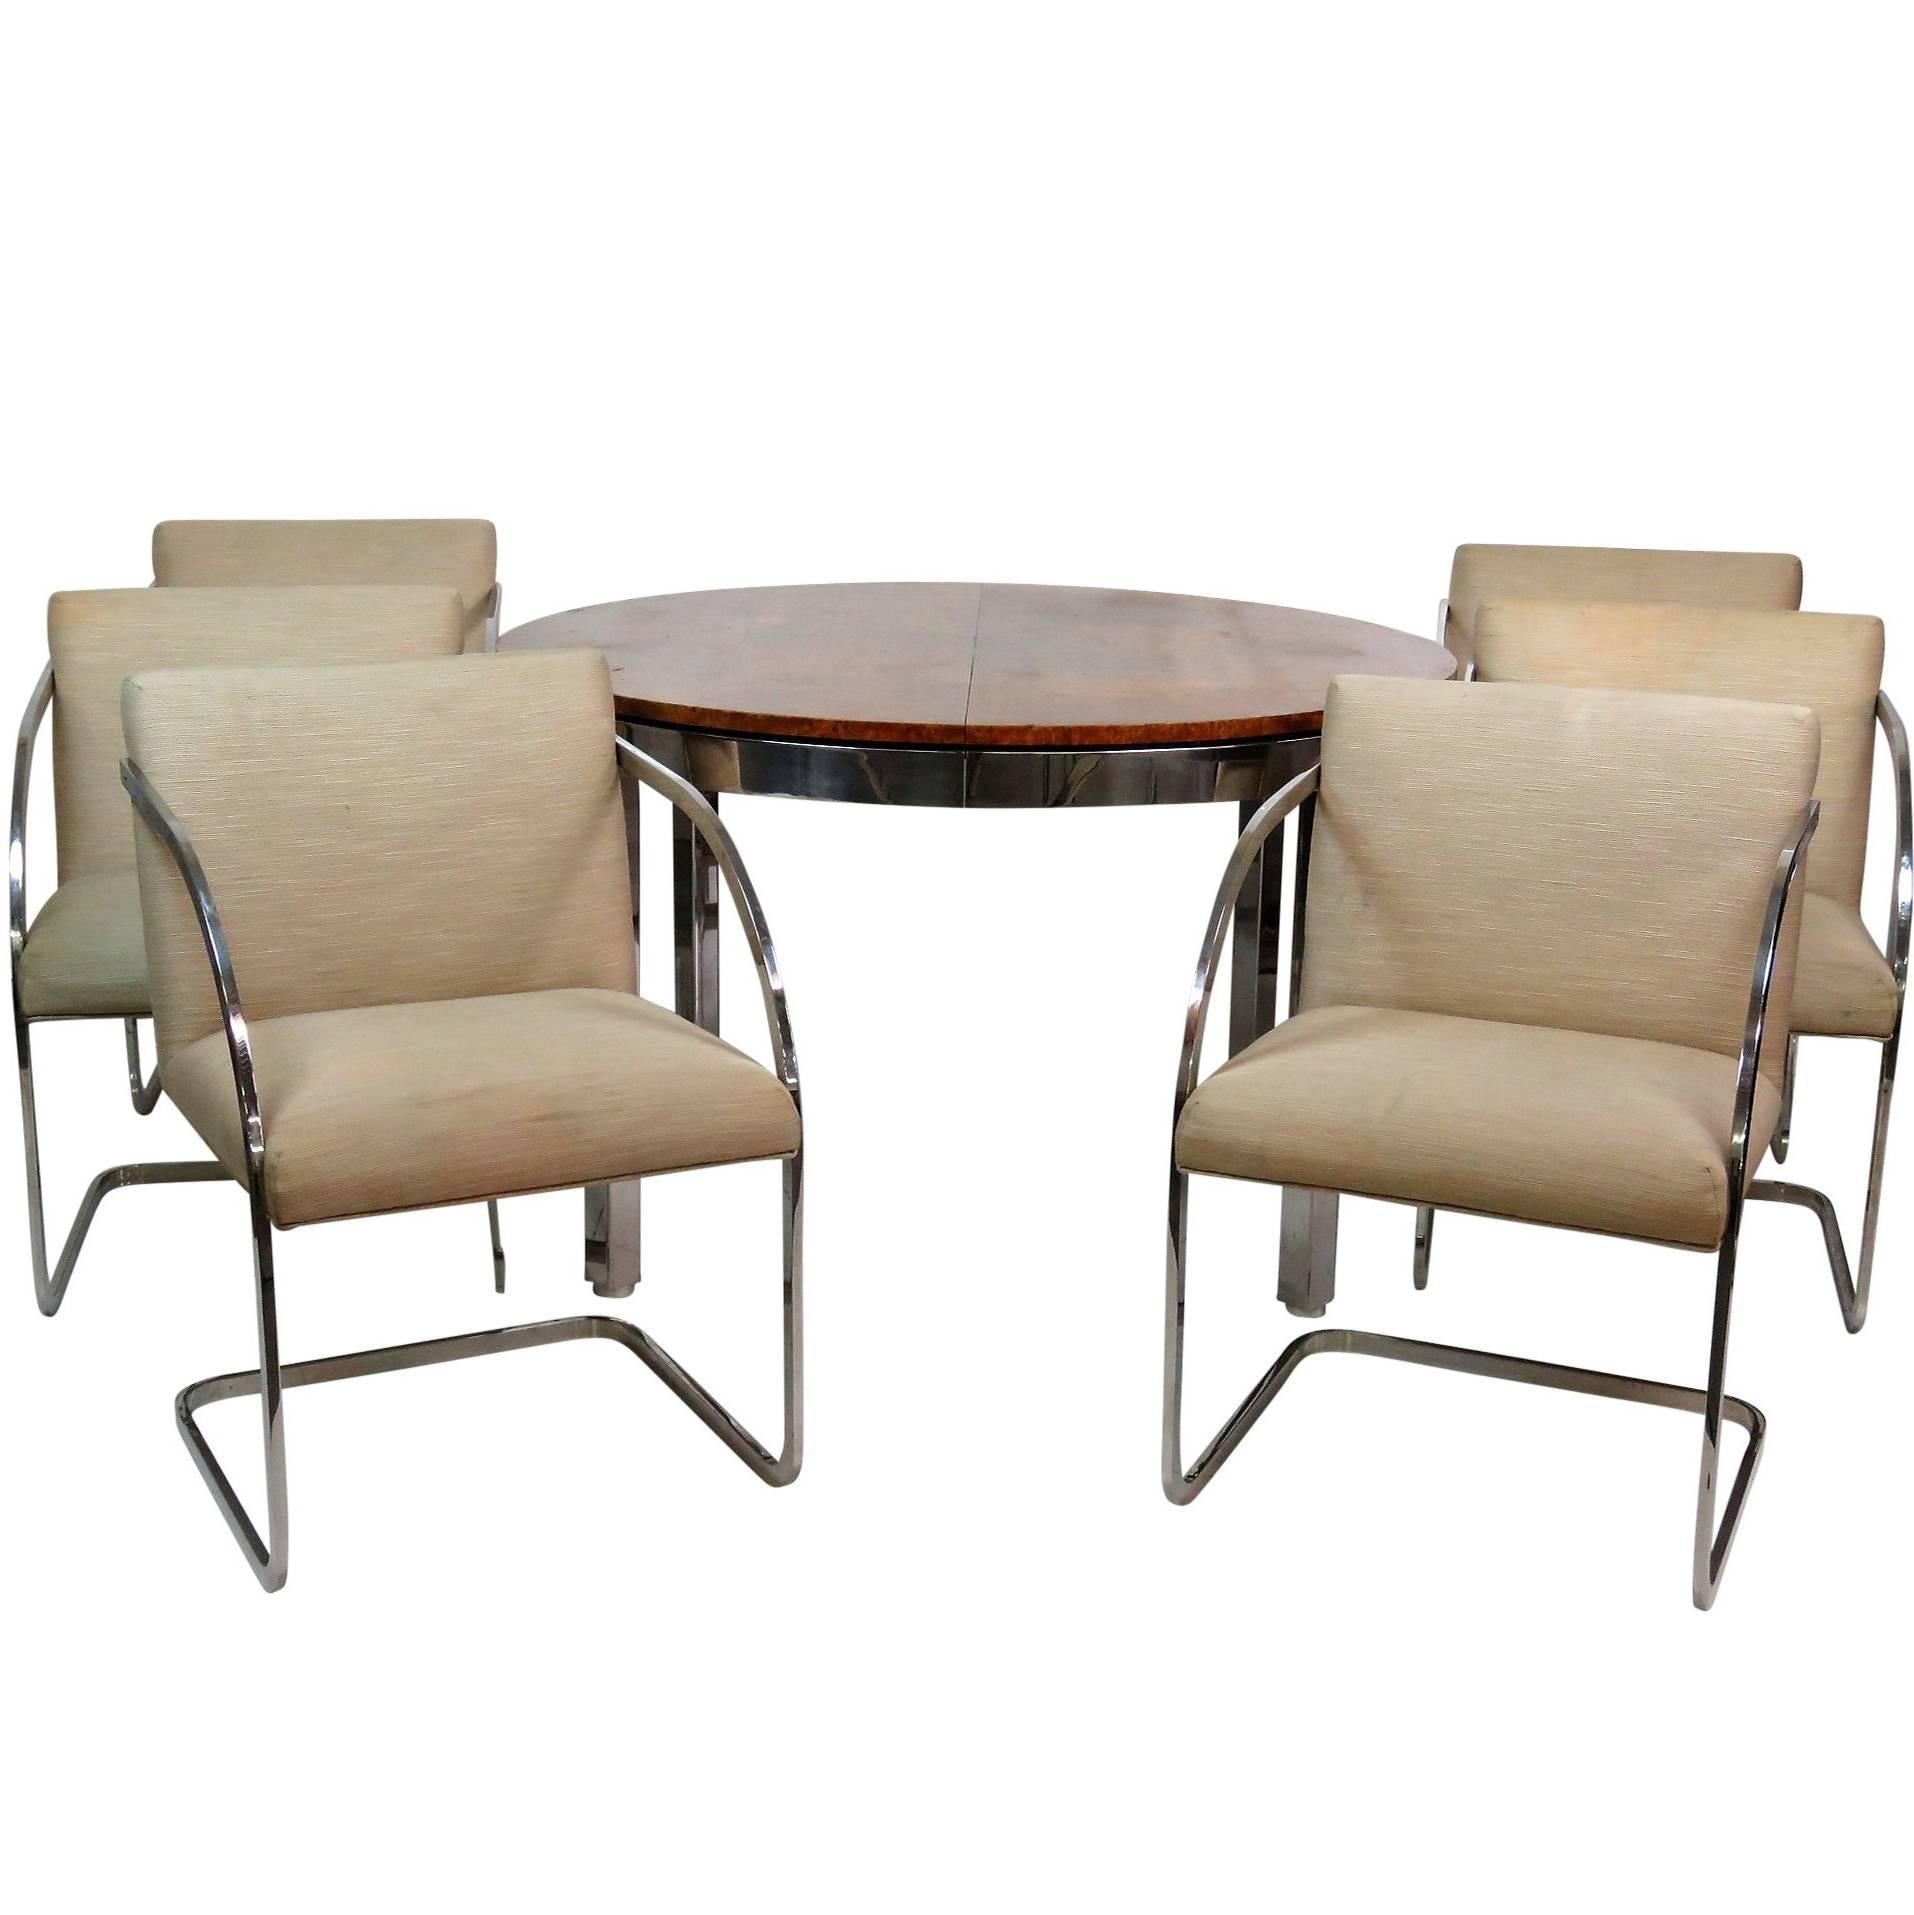 Milo Baughman Burl Walnut and Chrome Dining Set with Six Chairs